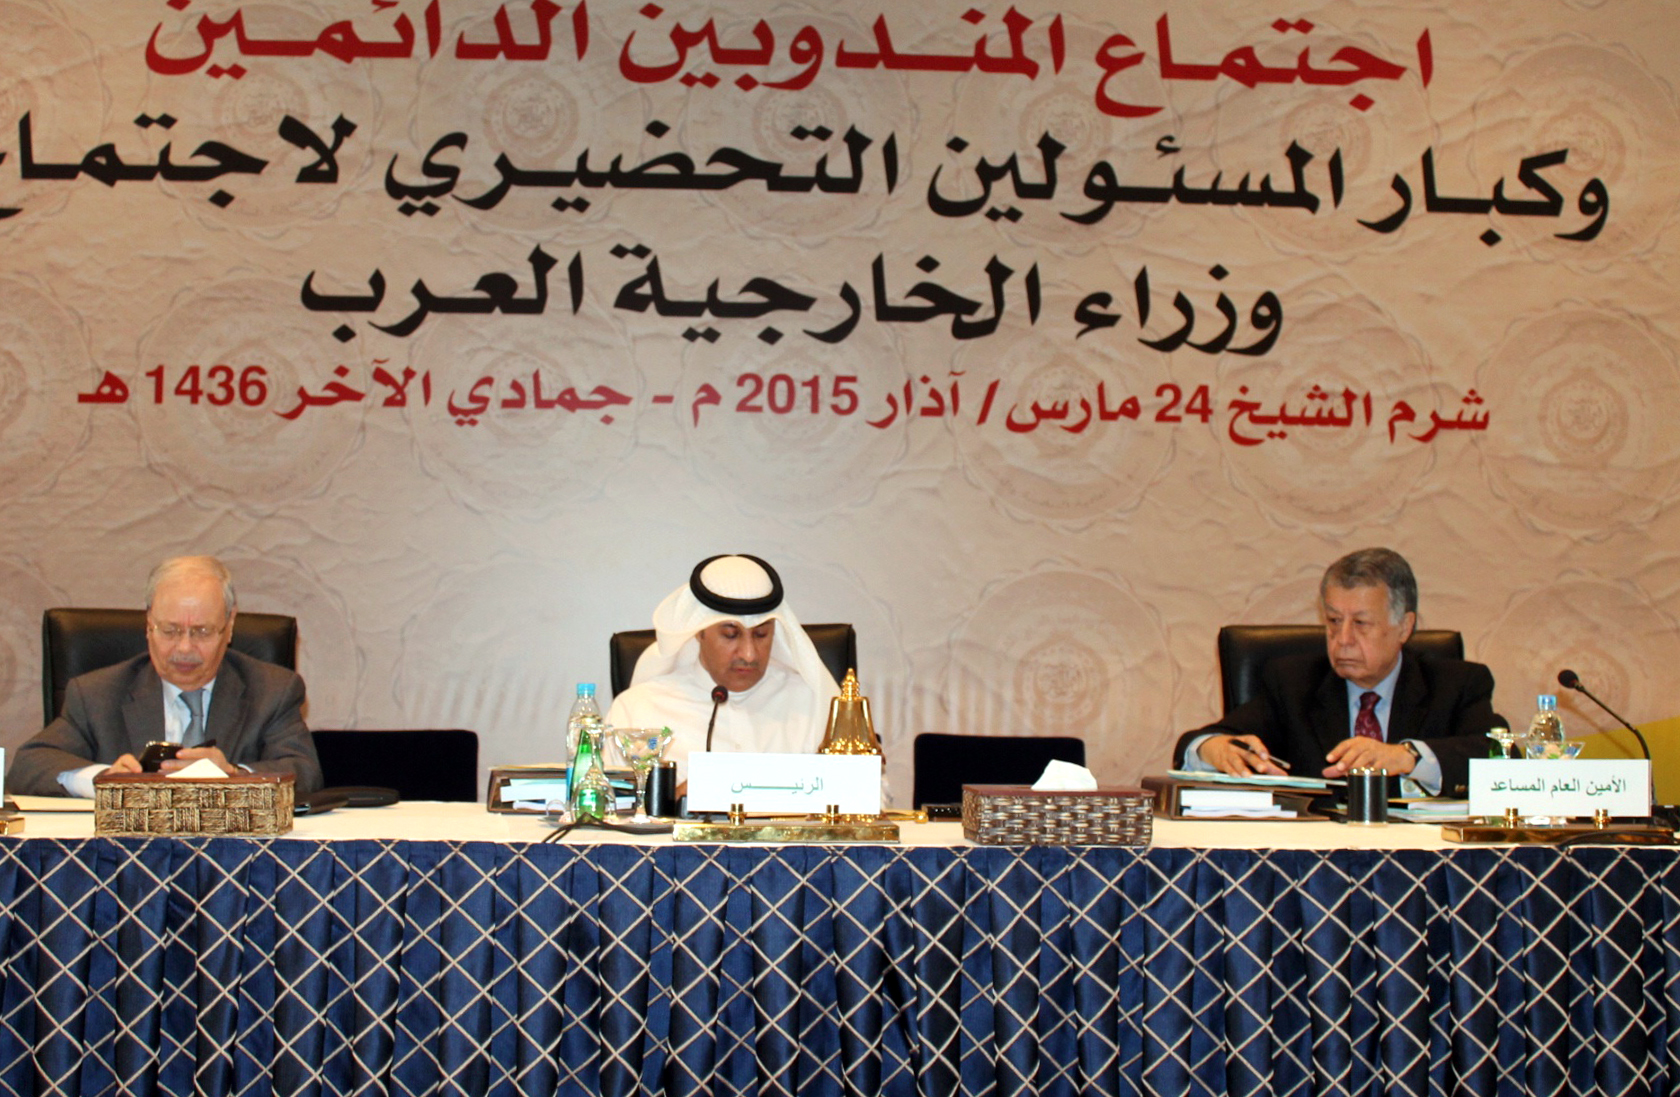 Kuwait's permanent delegate to the Arab League Ambassador Aziz Al-Daihani